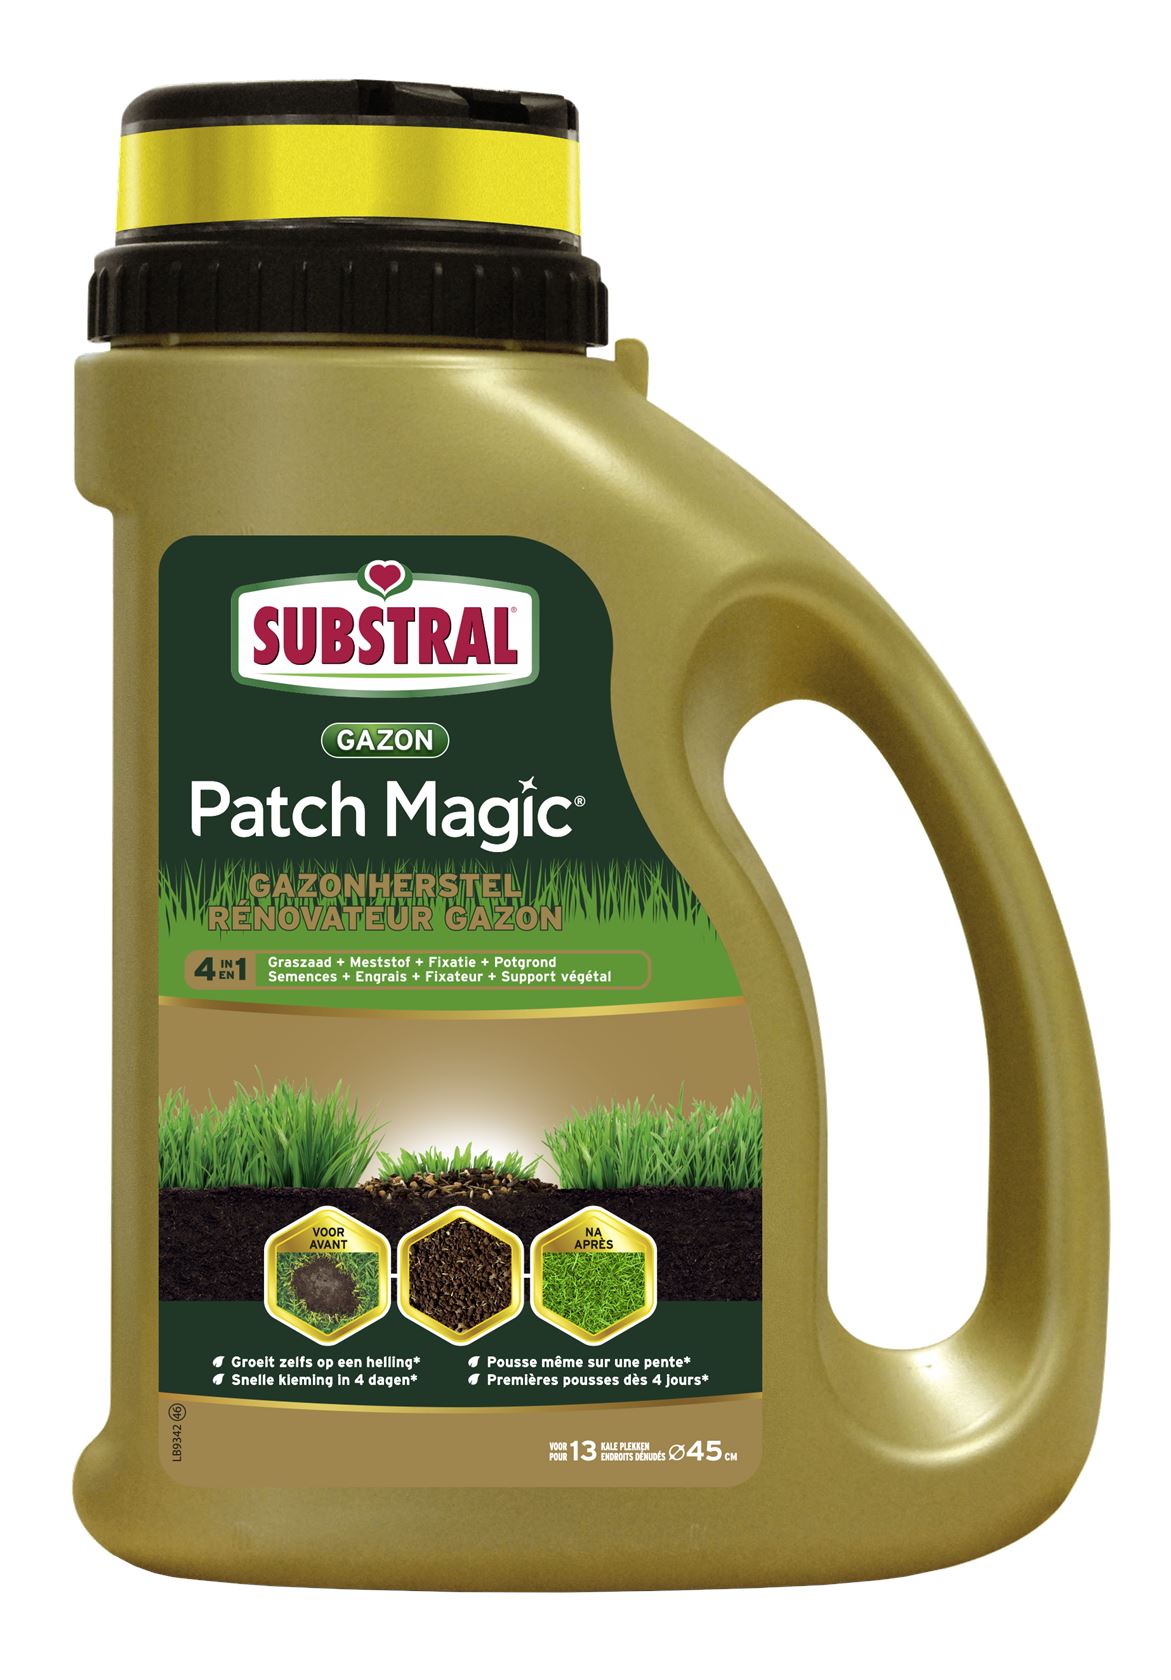 Substral patch magic® gazonherstel 4-in-1 - 1kg